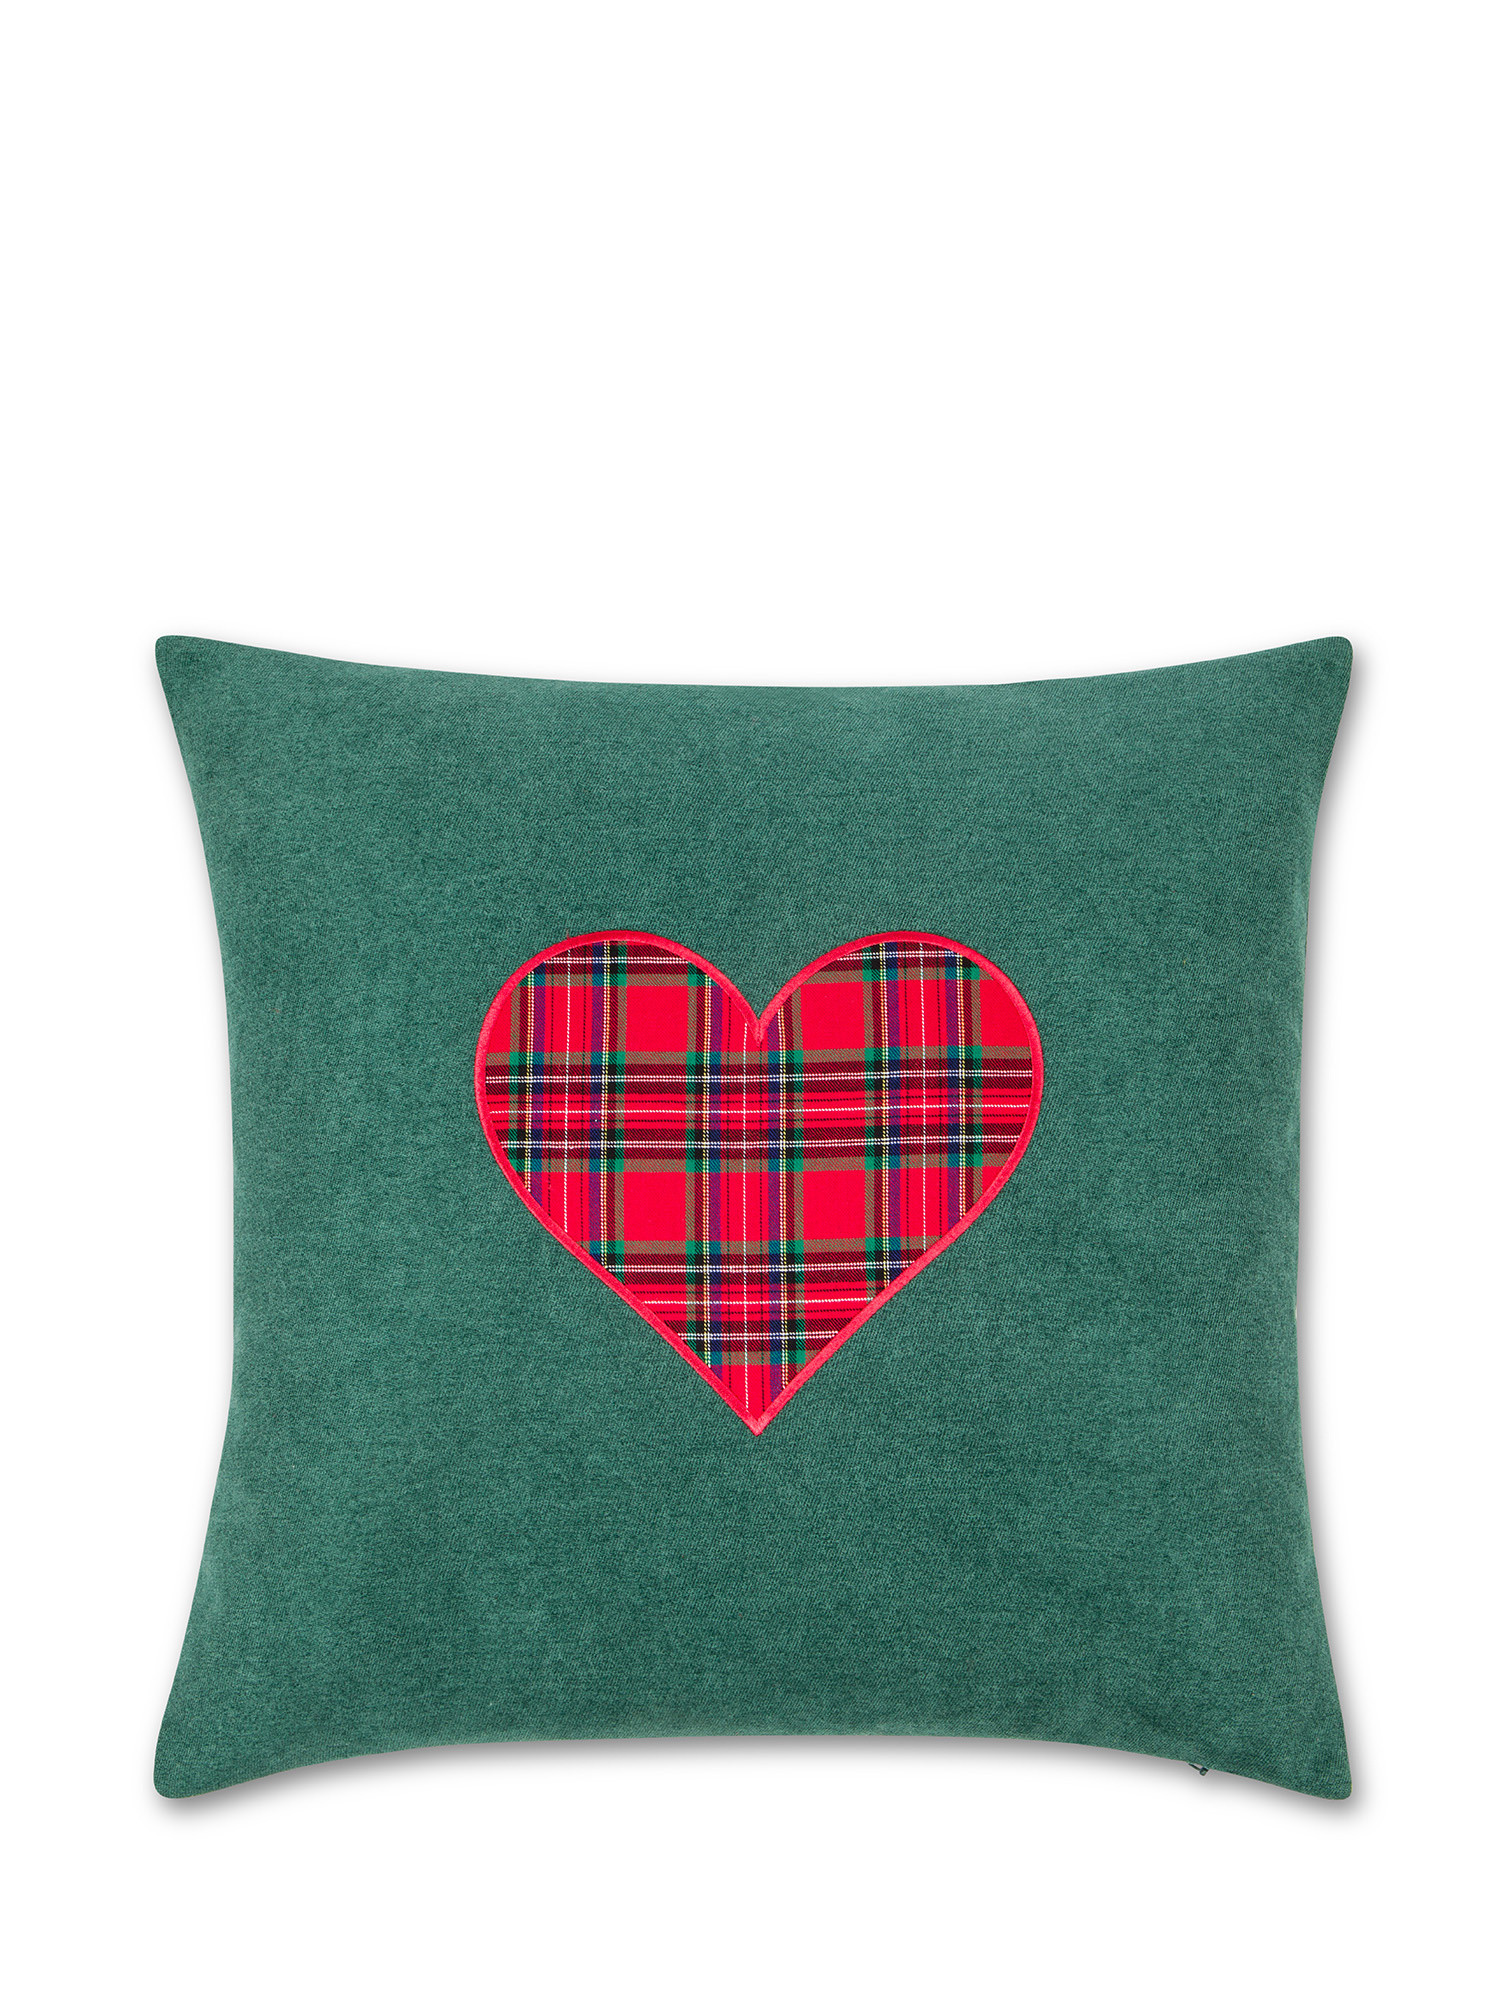 Cuscino con cuore applicato 45x45cm, Verde, large image number 0